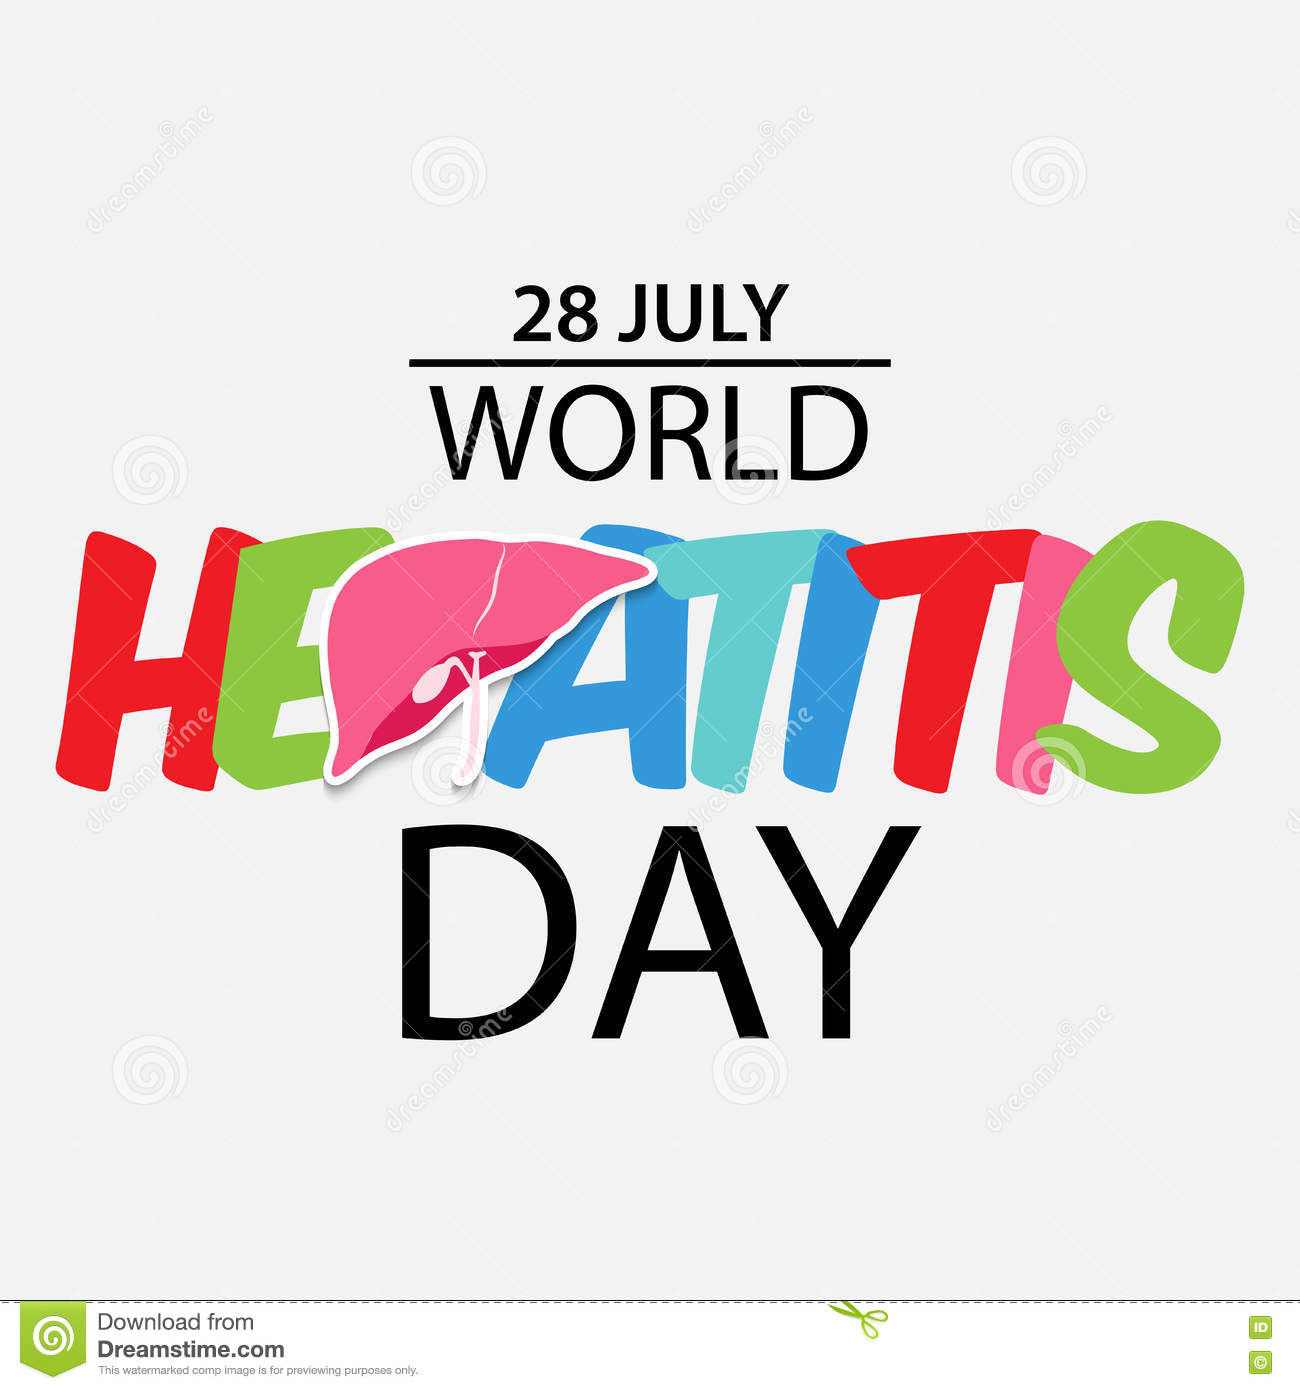 28 July World Hepatitis Day Greeting Card